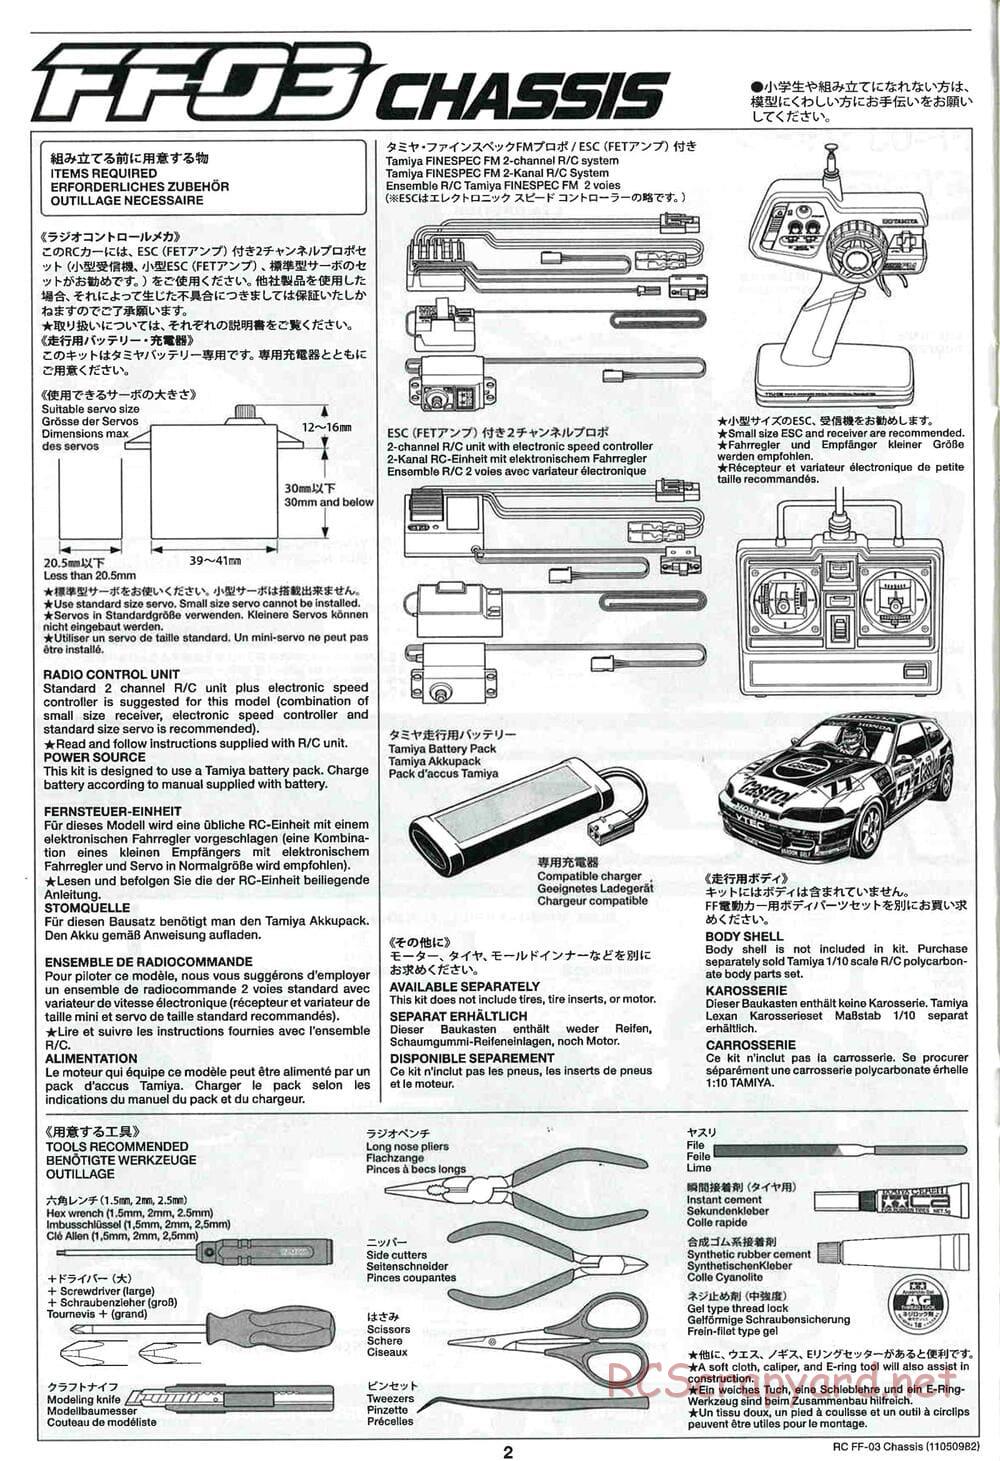 Tamiya - FF-03 Chassis - Manual - Page 2